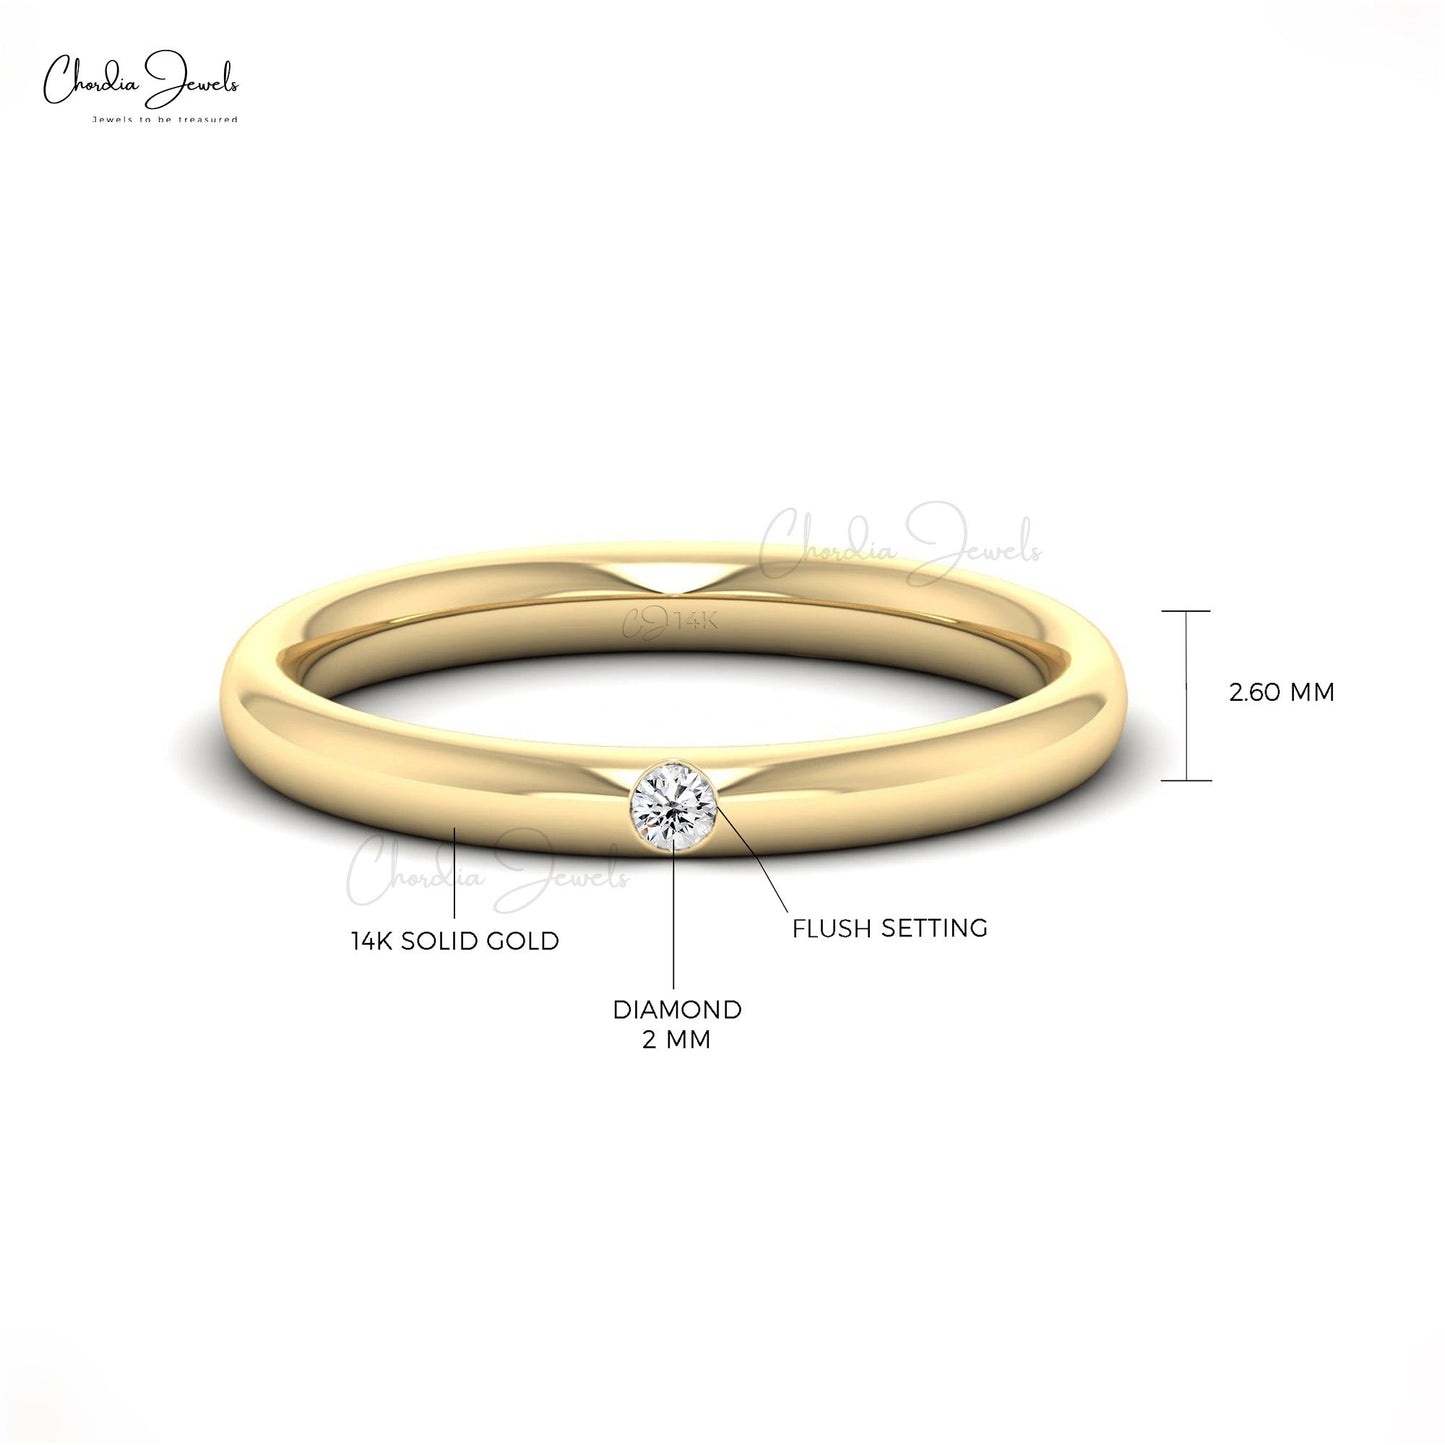 Plain Circular Design Gold Ring 01-11 - SPE Gold,Chennai